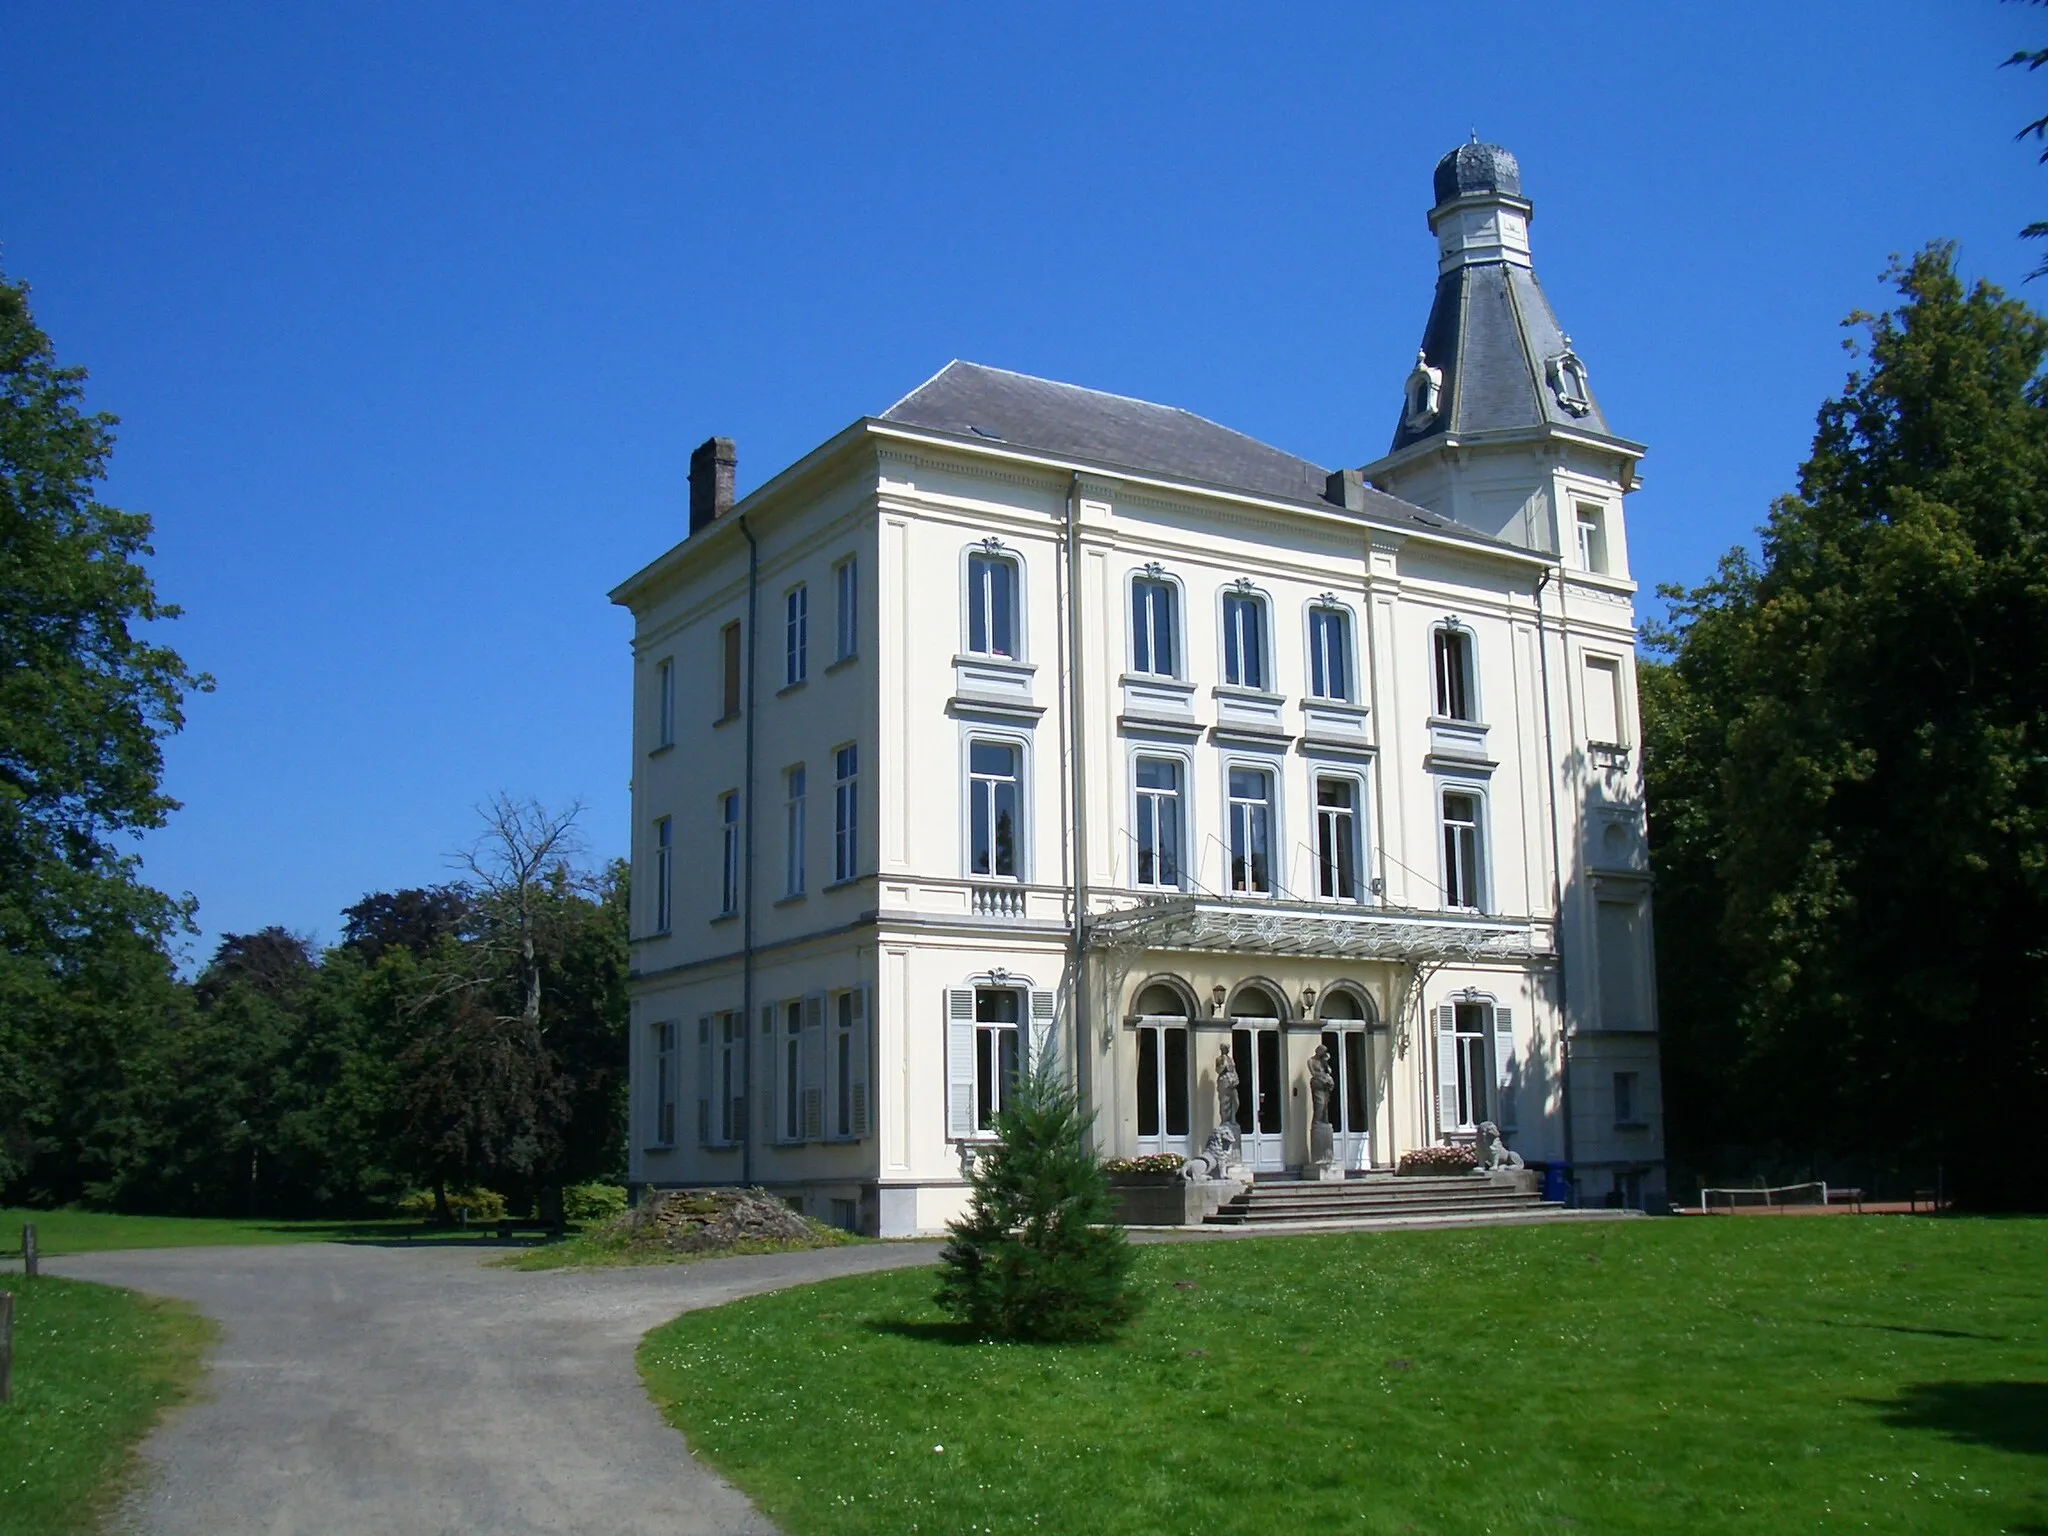 Photo showing: Neoclassicistisch kasteel en landhuis, Kasteel Borluut
Kleine Gentstraat 46

51°1'10"NB, 3°39'28"OL